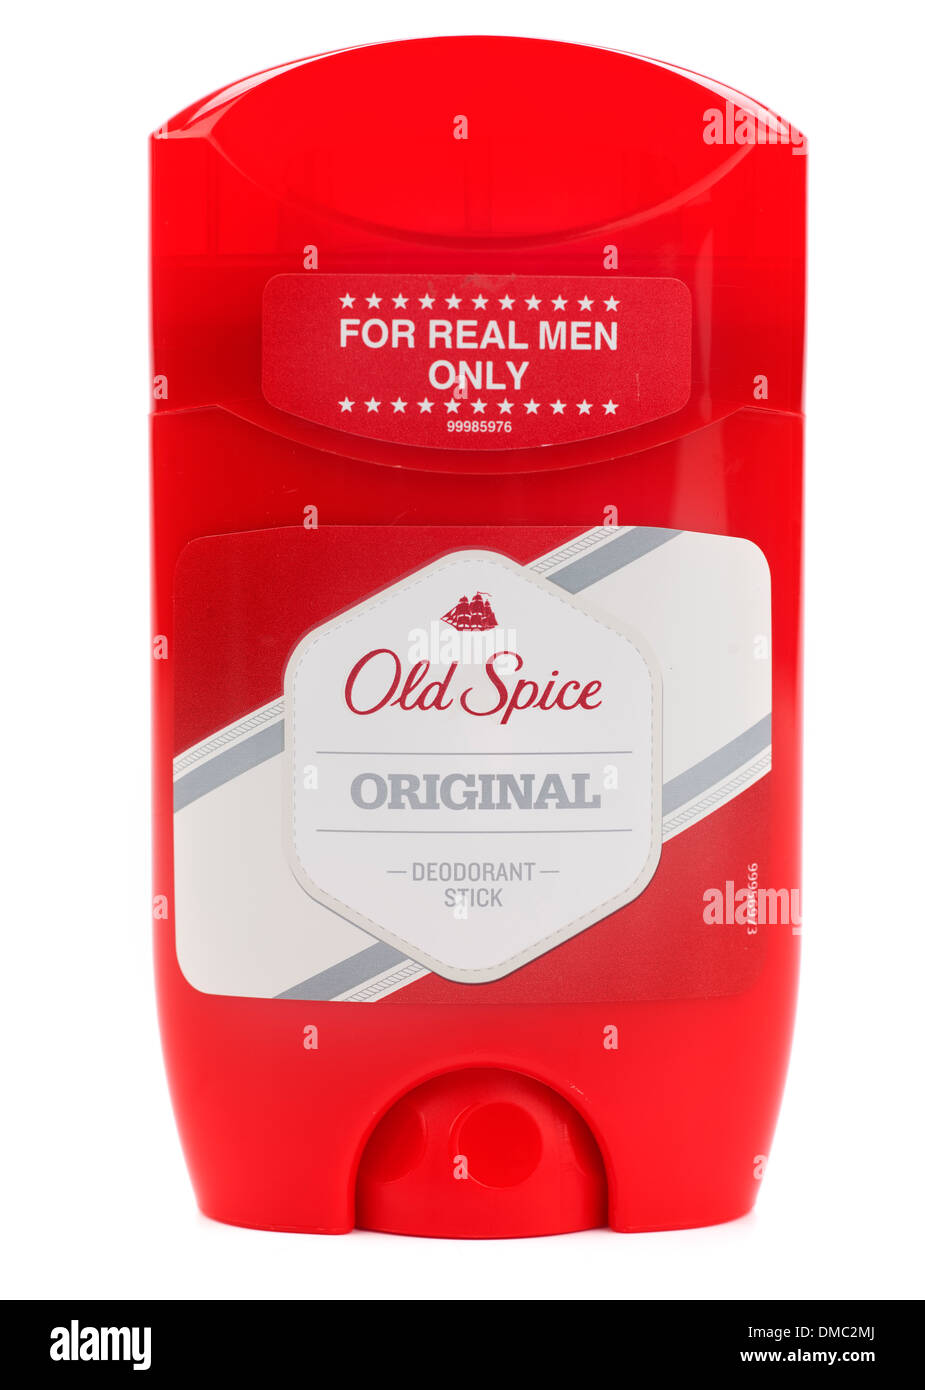 Old Spice desodorante roll on Original stick para verdaderos hombres  solamente Fotografía de stock - Alamy